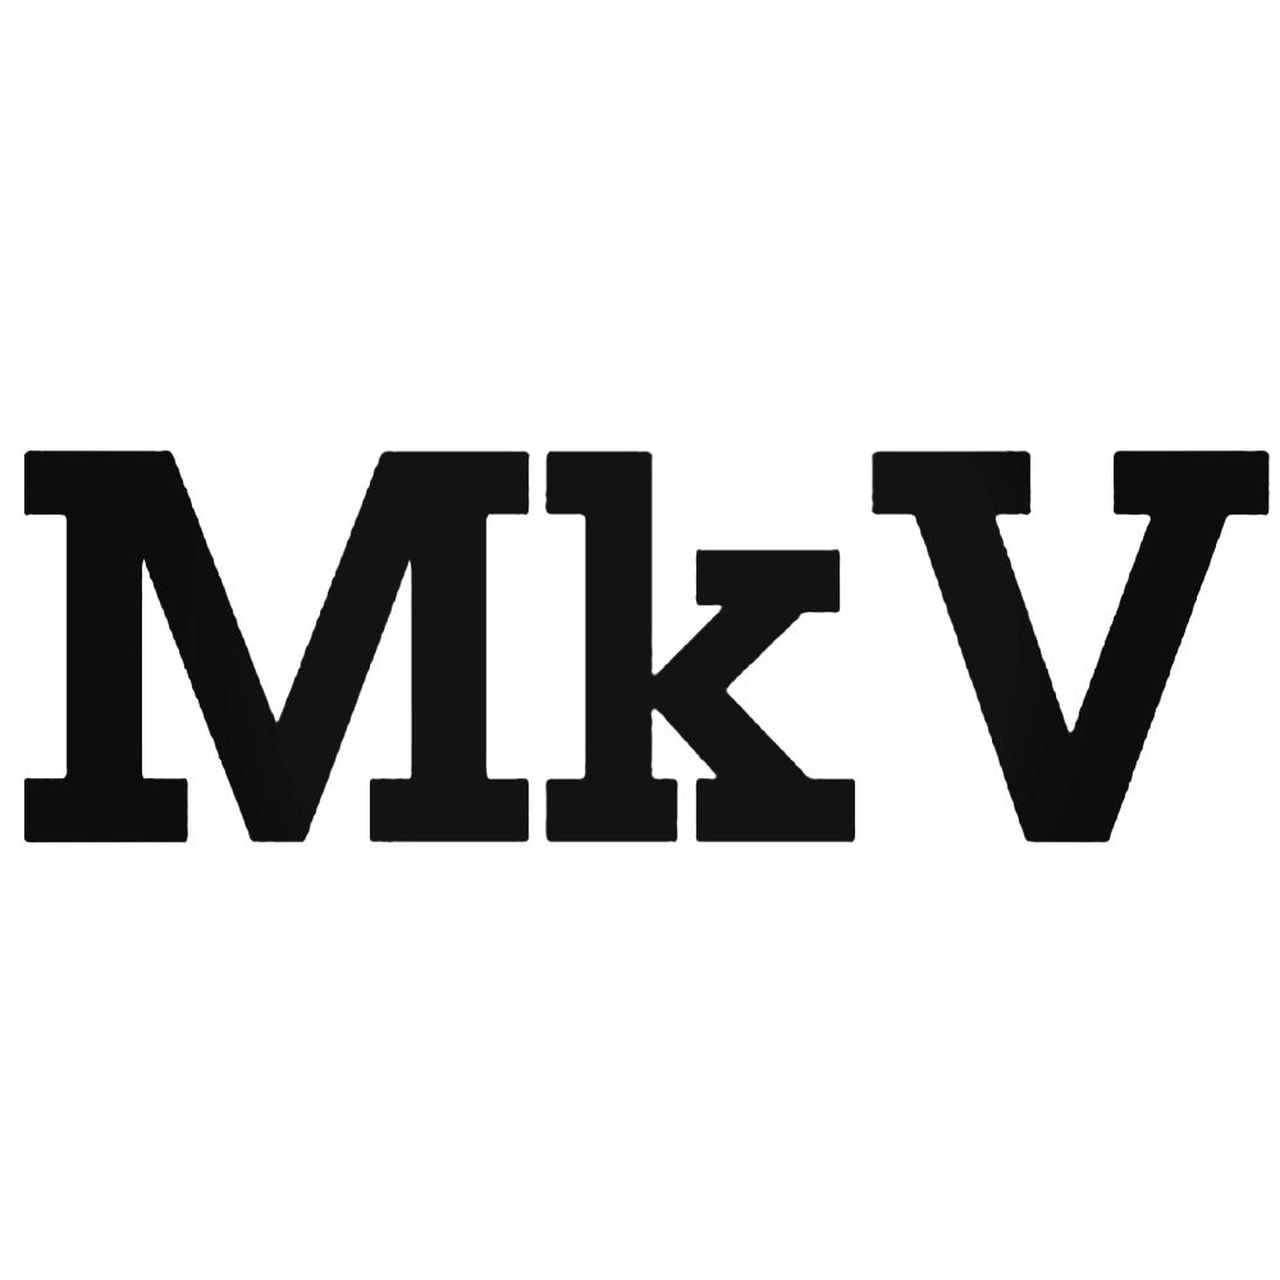 MKV Logo - Volkswagen Mkv Golf 5 Decal Sticker